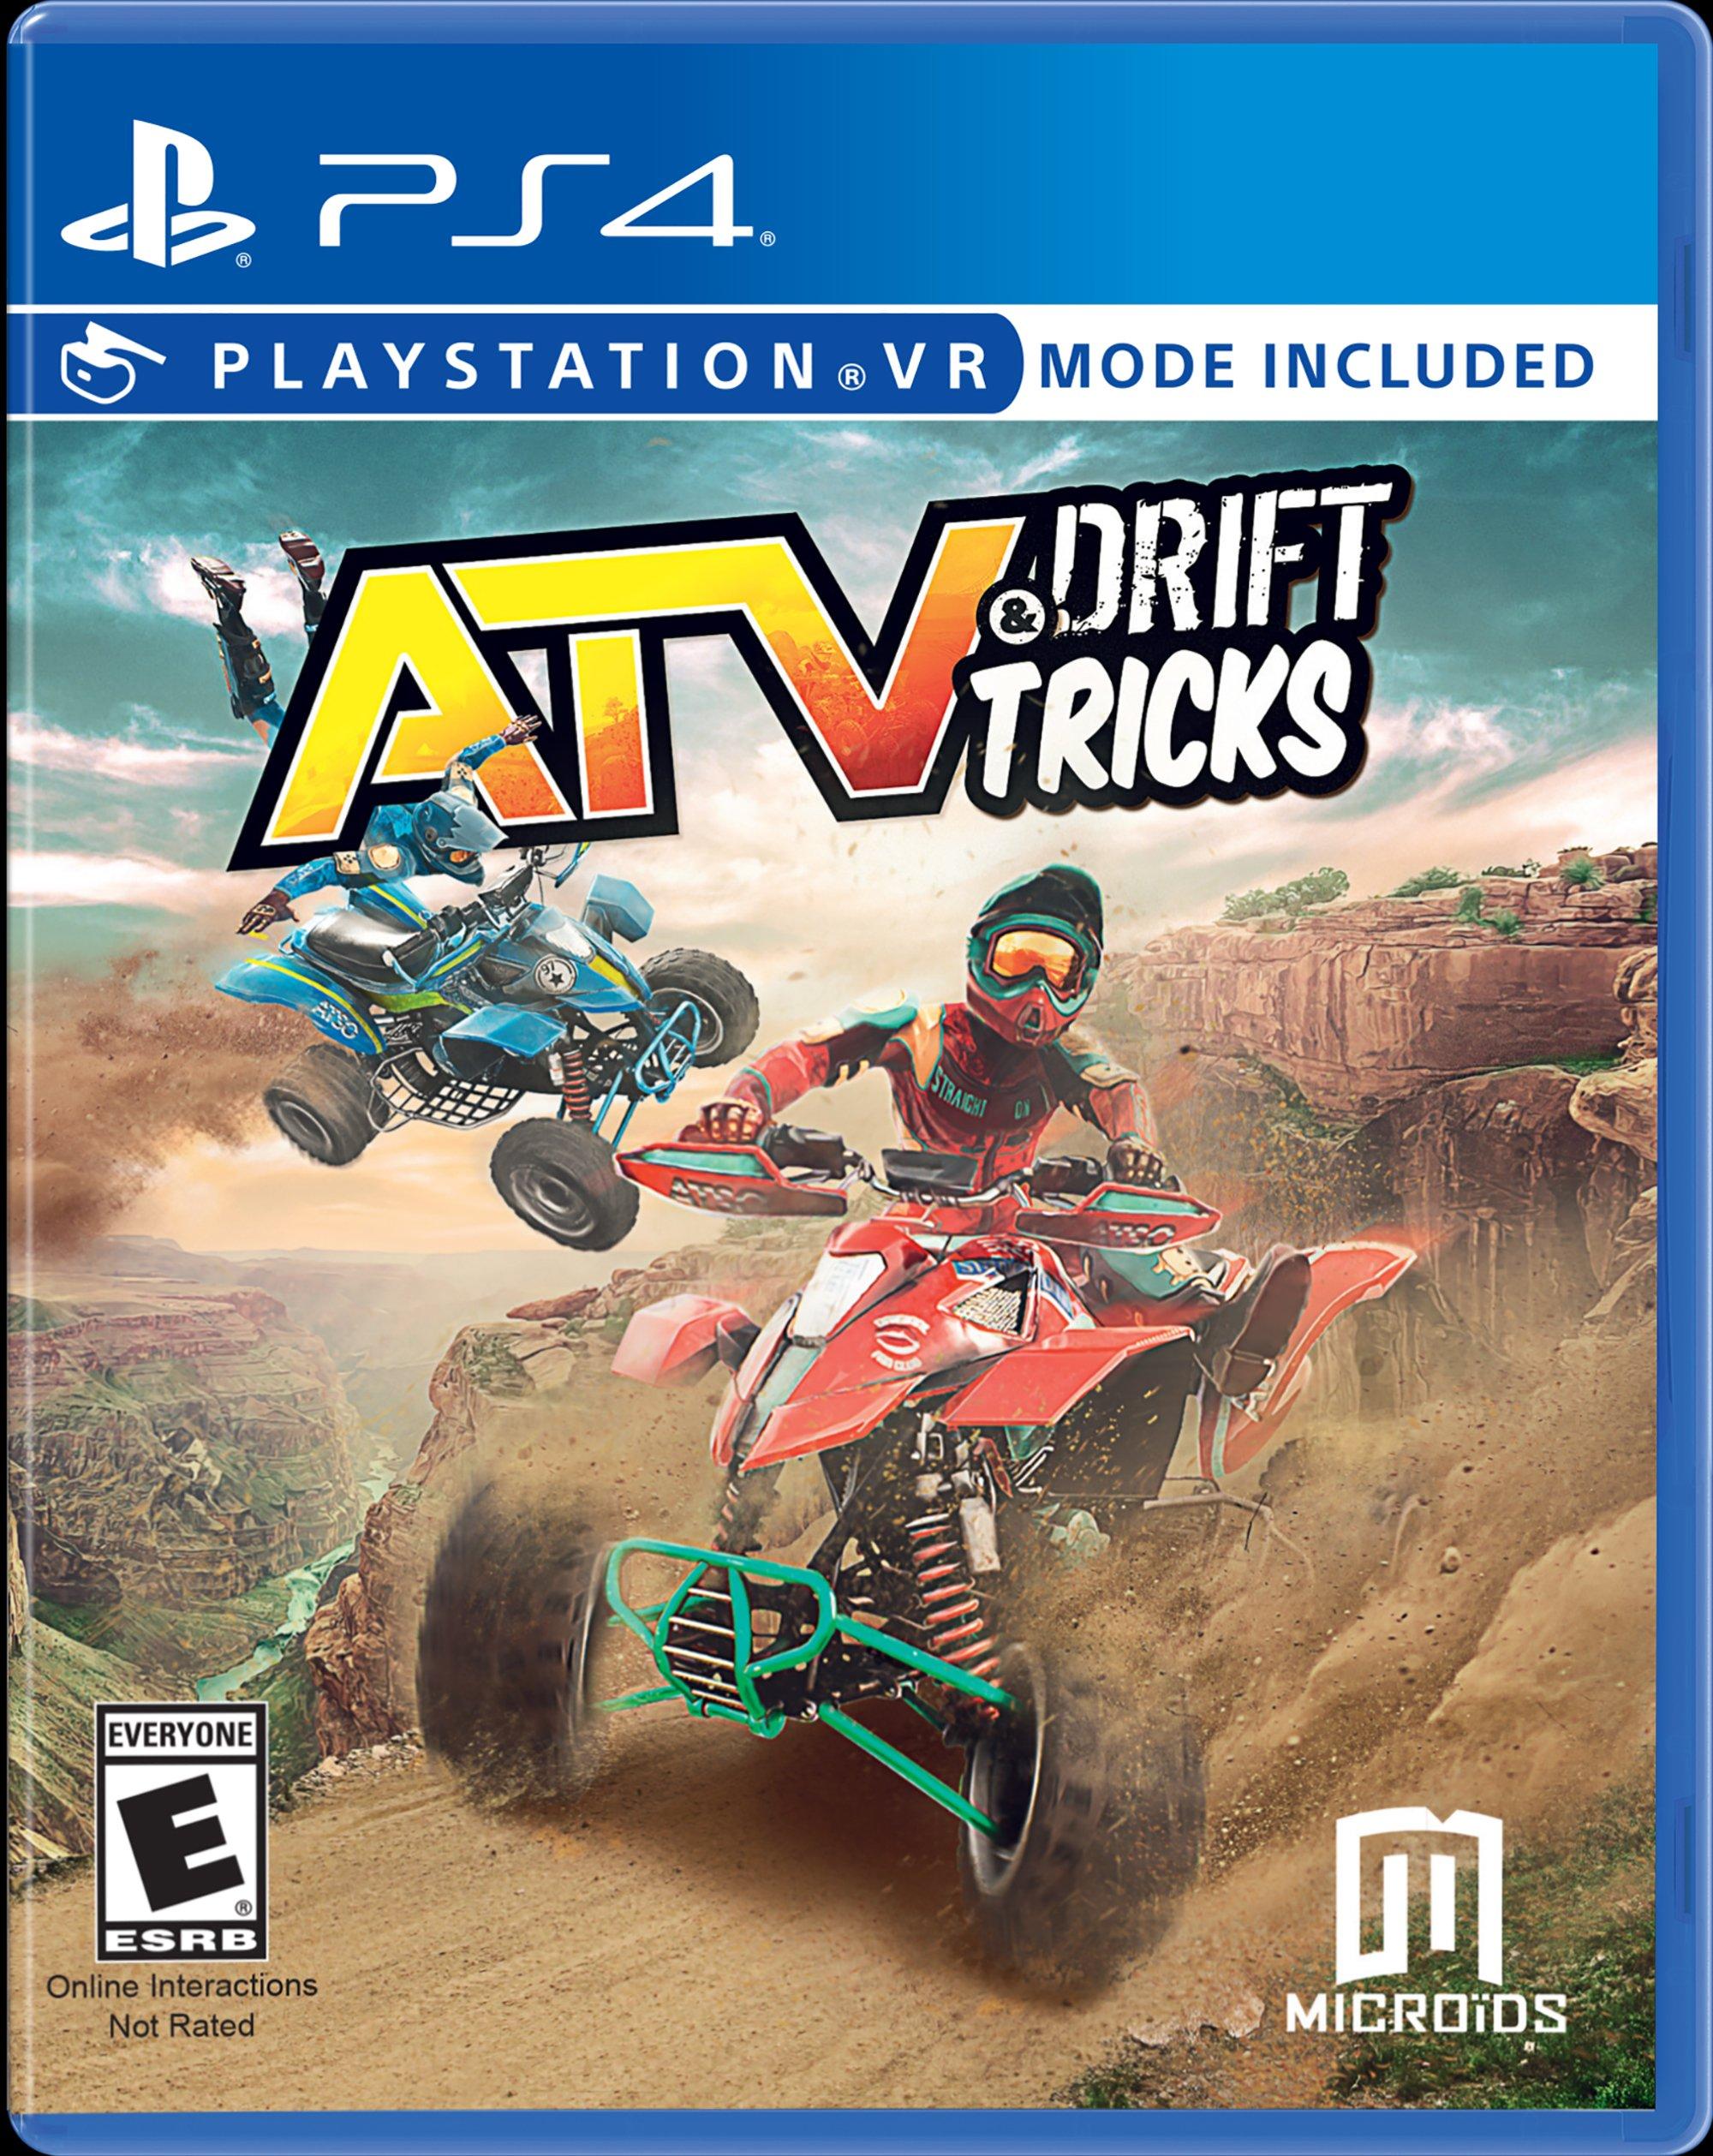 Jogo ATV Drift & Tricks Defini R$ 5 - Promobit